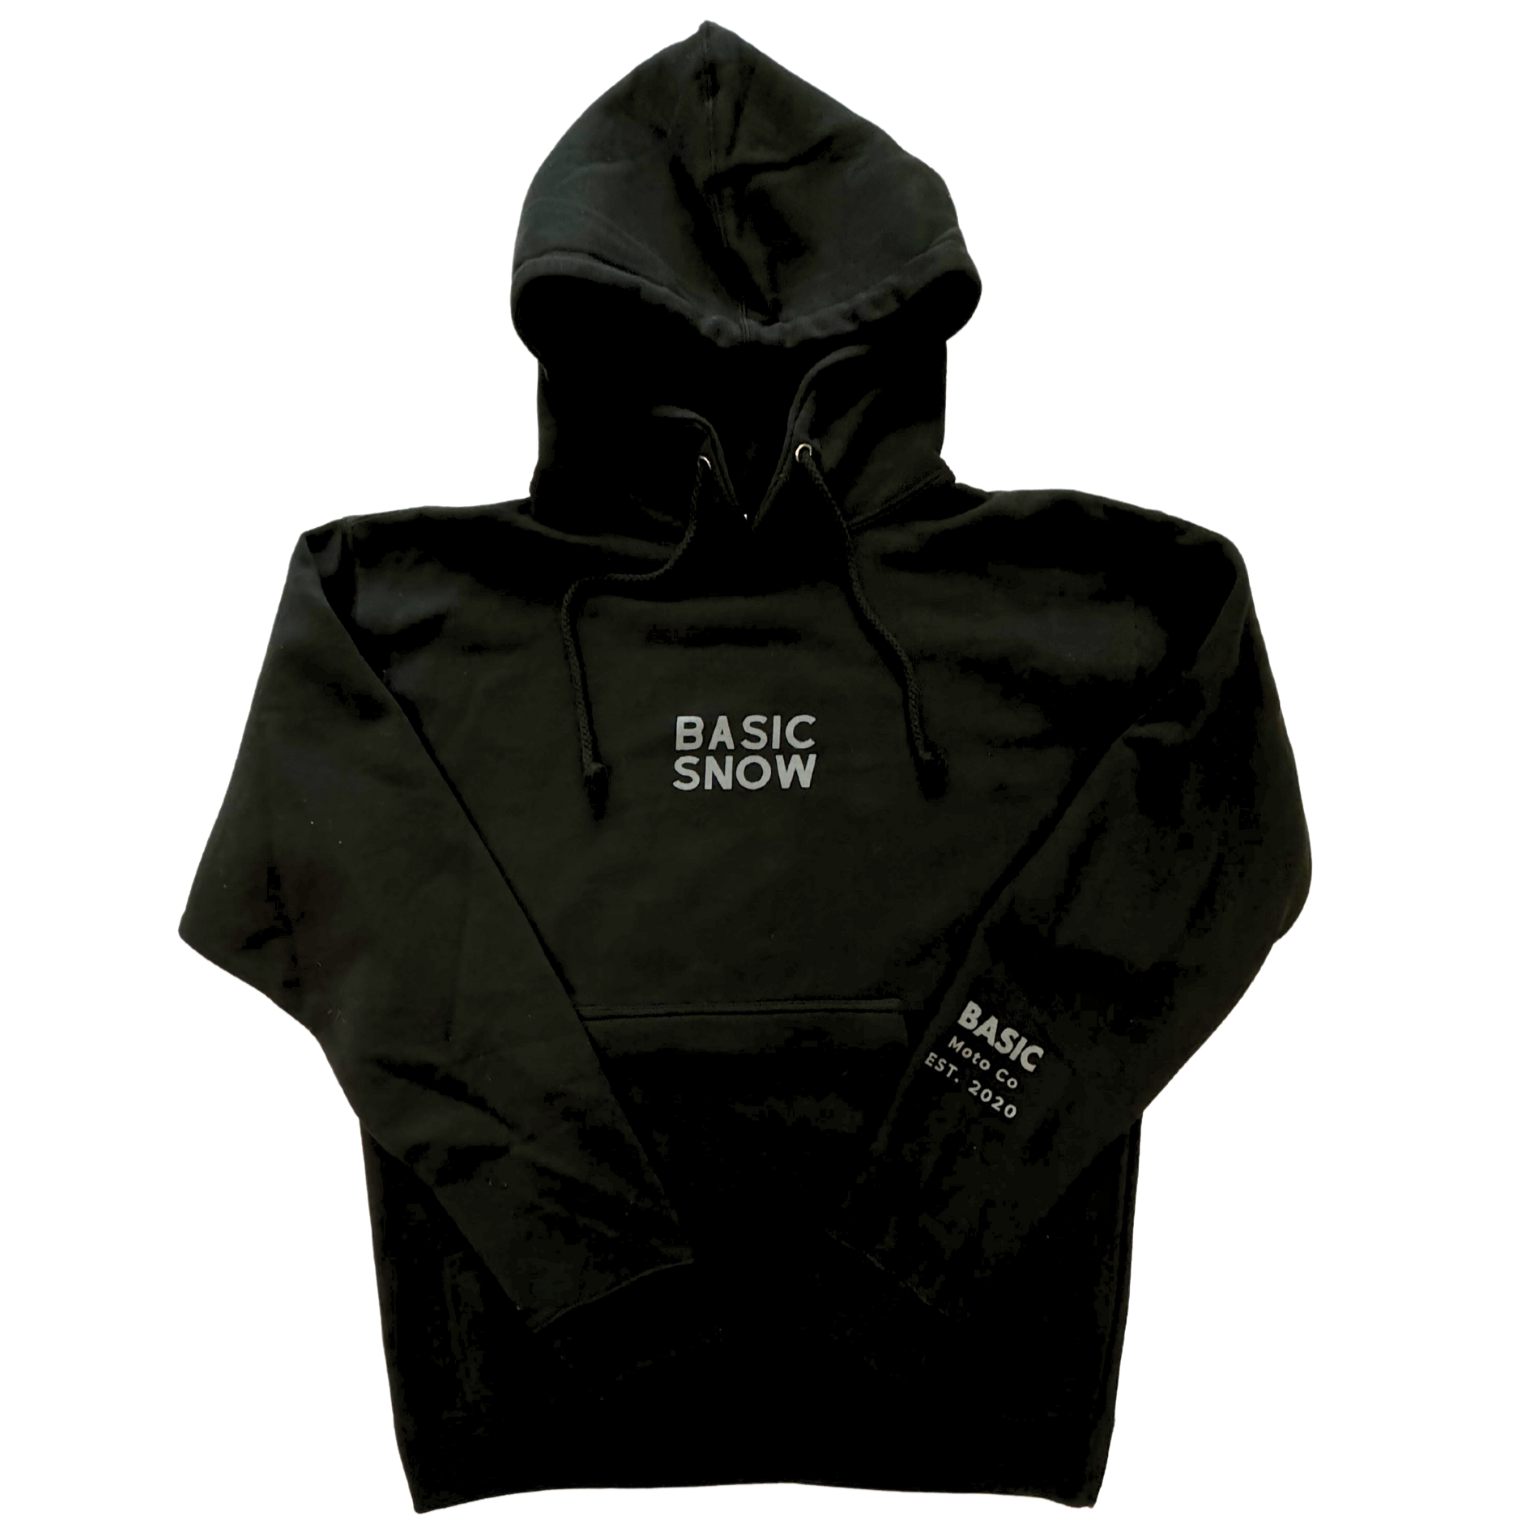 Basic Snow - Heavyweight Hooded Sweatshirt - Black